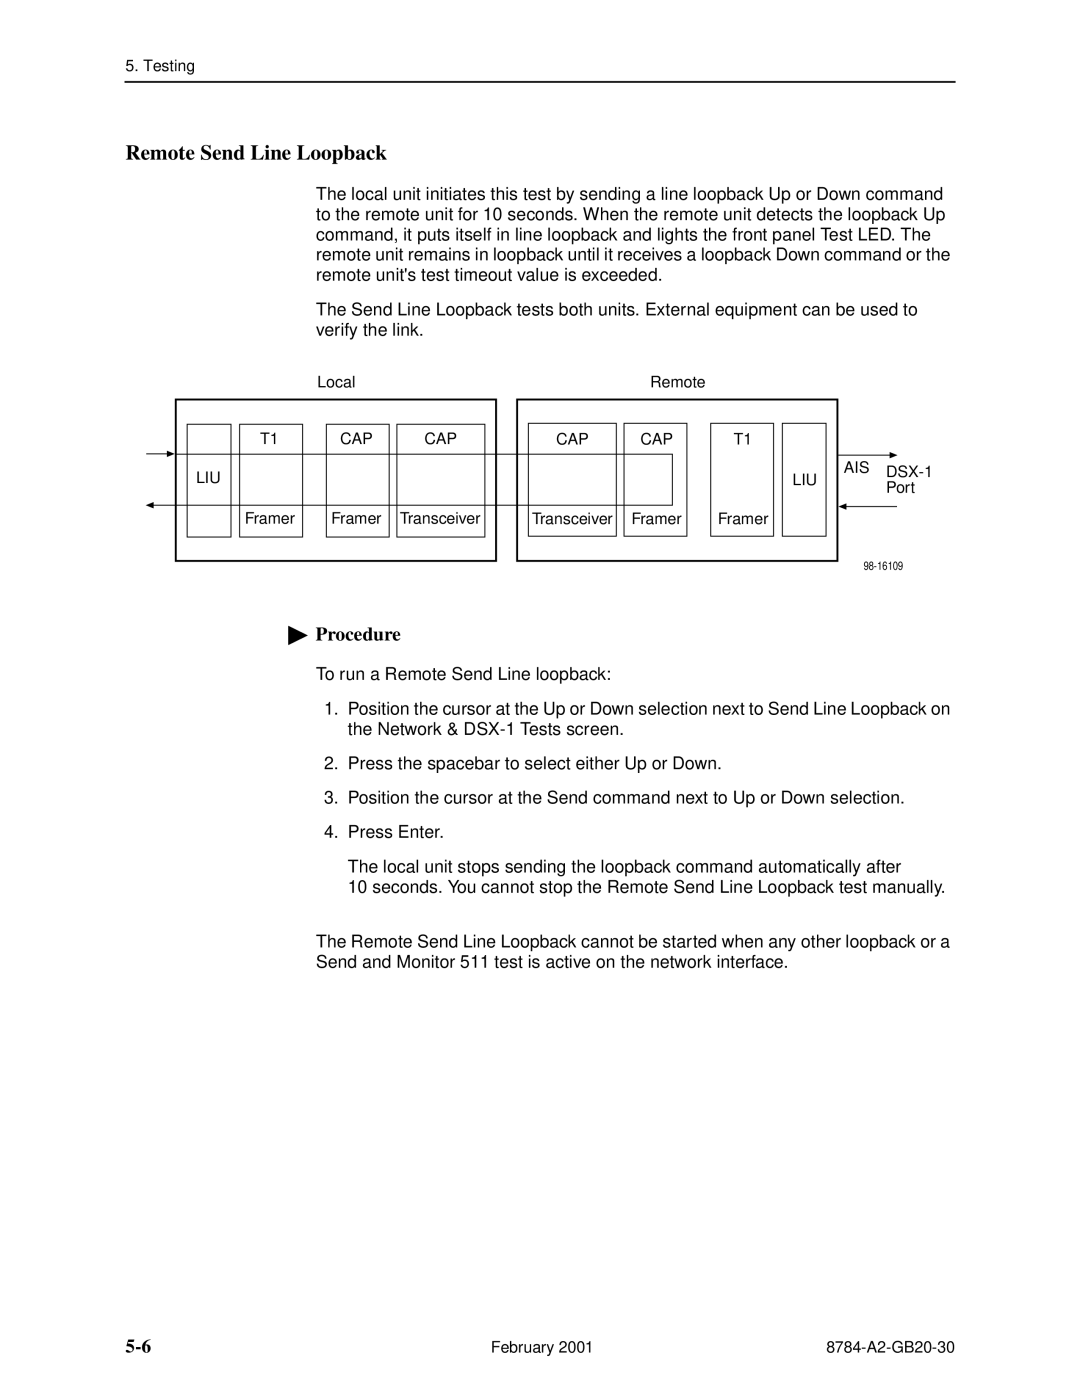 Paradyne 8784 manual Remote Send Line Loopback, Procedure 